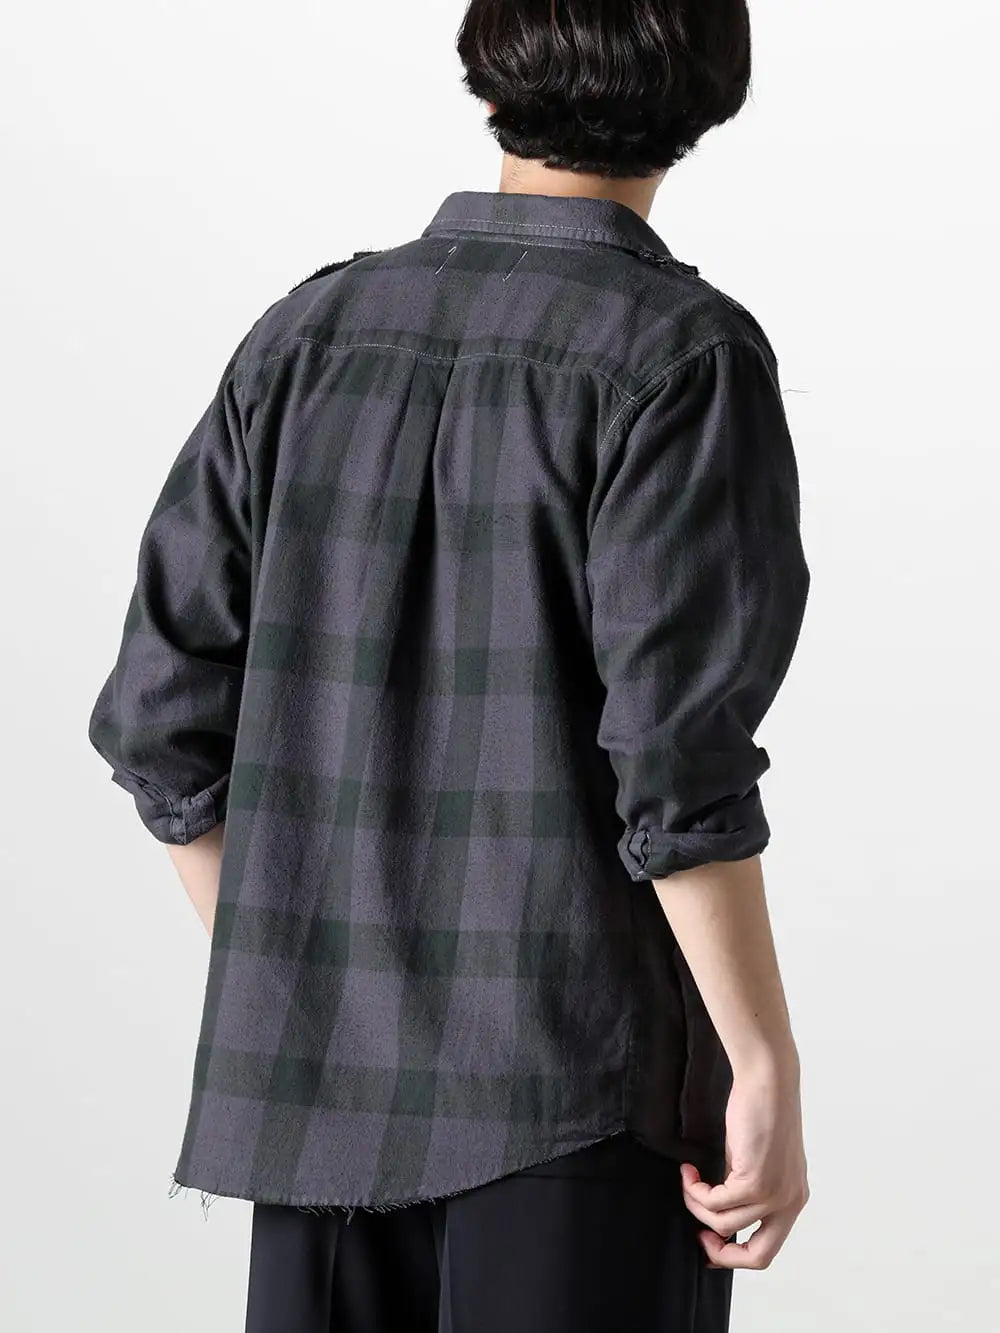 Rafu  24SS - Remake Shirt Inspired by Vintage Clothing - Rafu030 - Remake Shirt - IH-24SS-T006-AG-Black-Black-cord - Short Sleeved T-Shirt Black × Black cord - IH-24SS-P018-ND-Dark-Navy - Two Tucks Wide Trousers Dark Navy 3-007